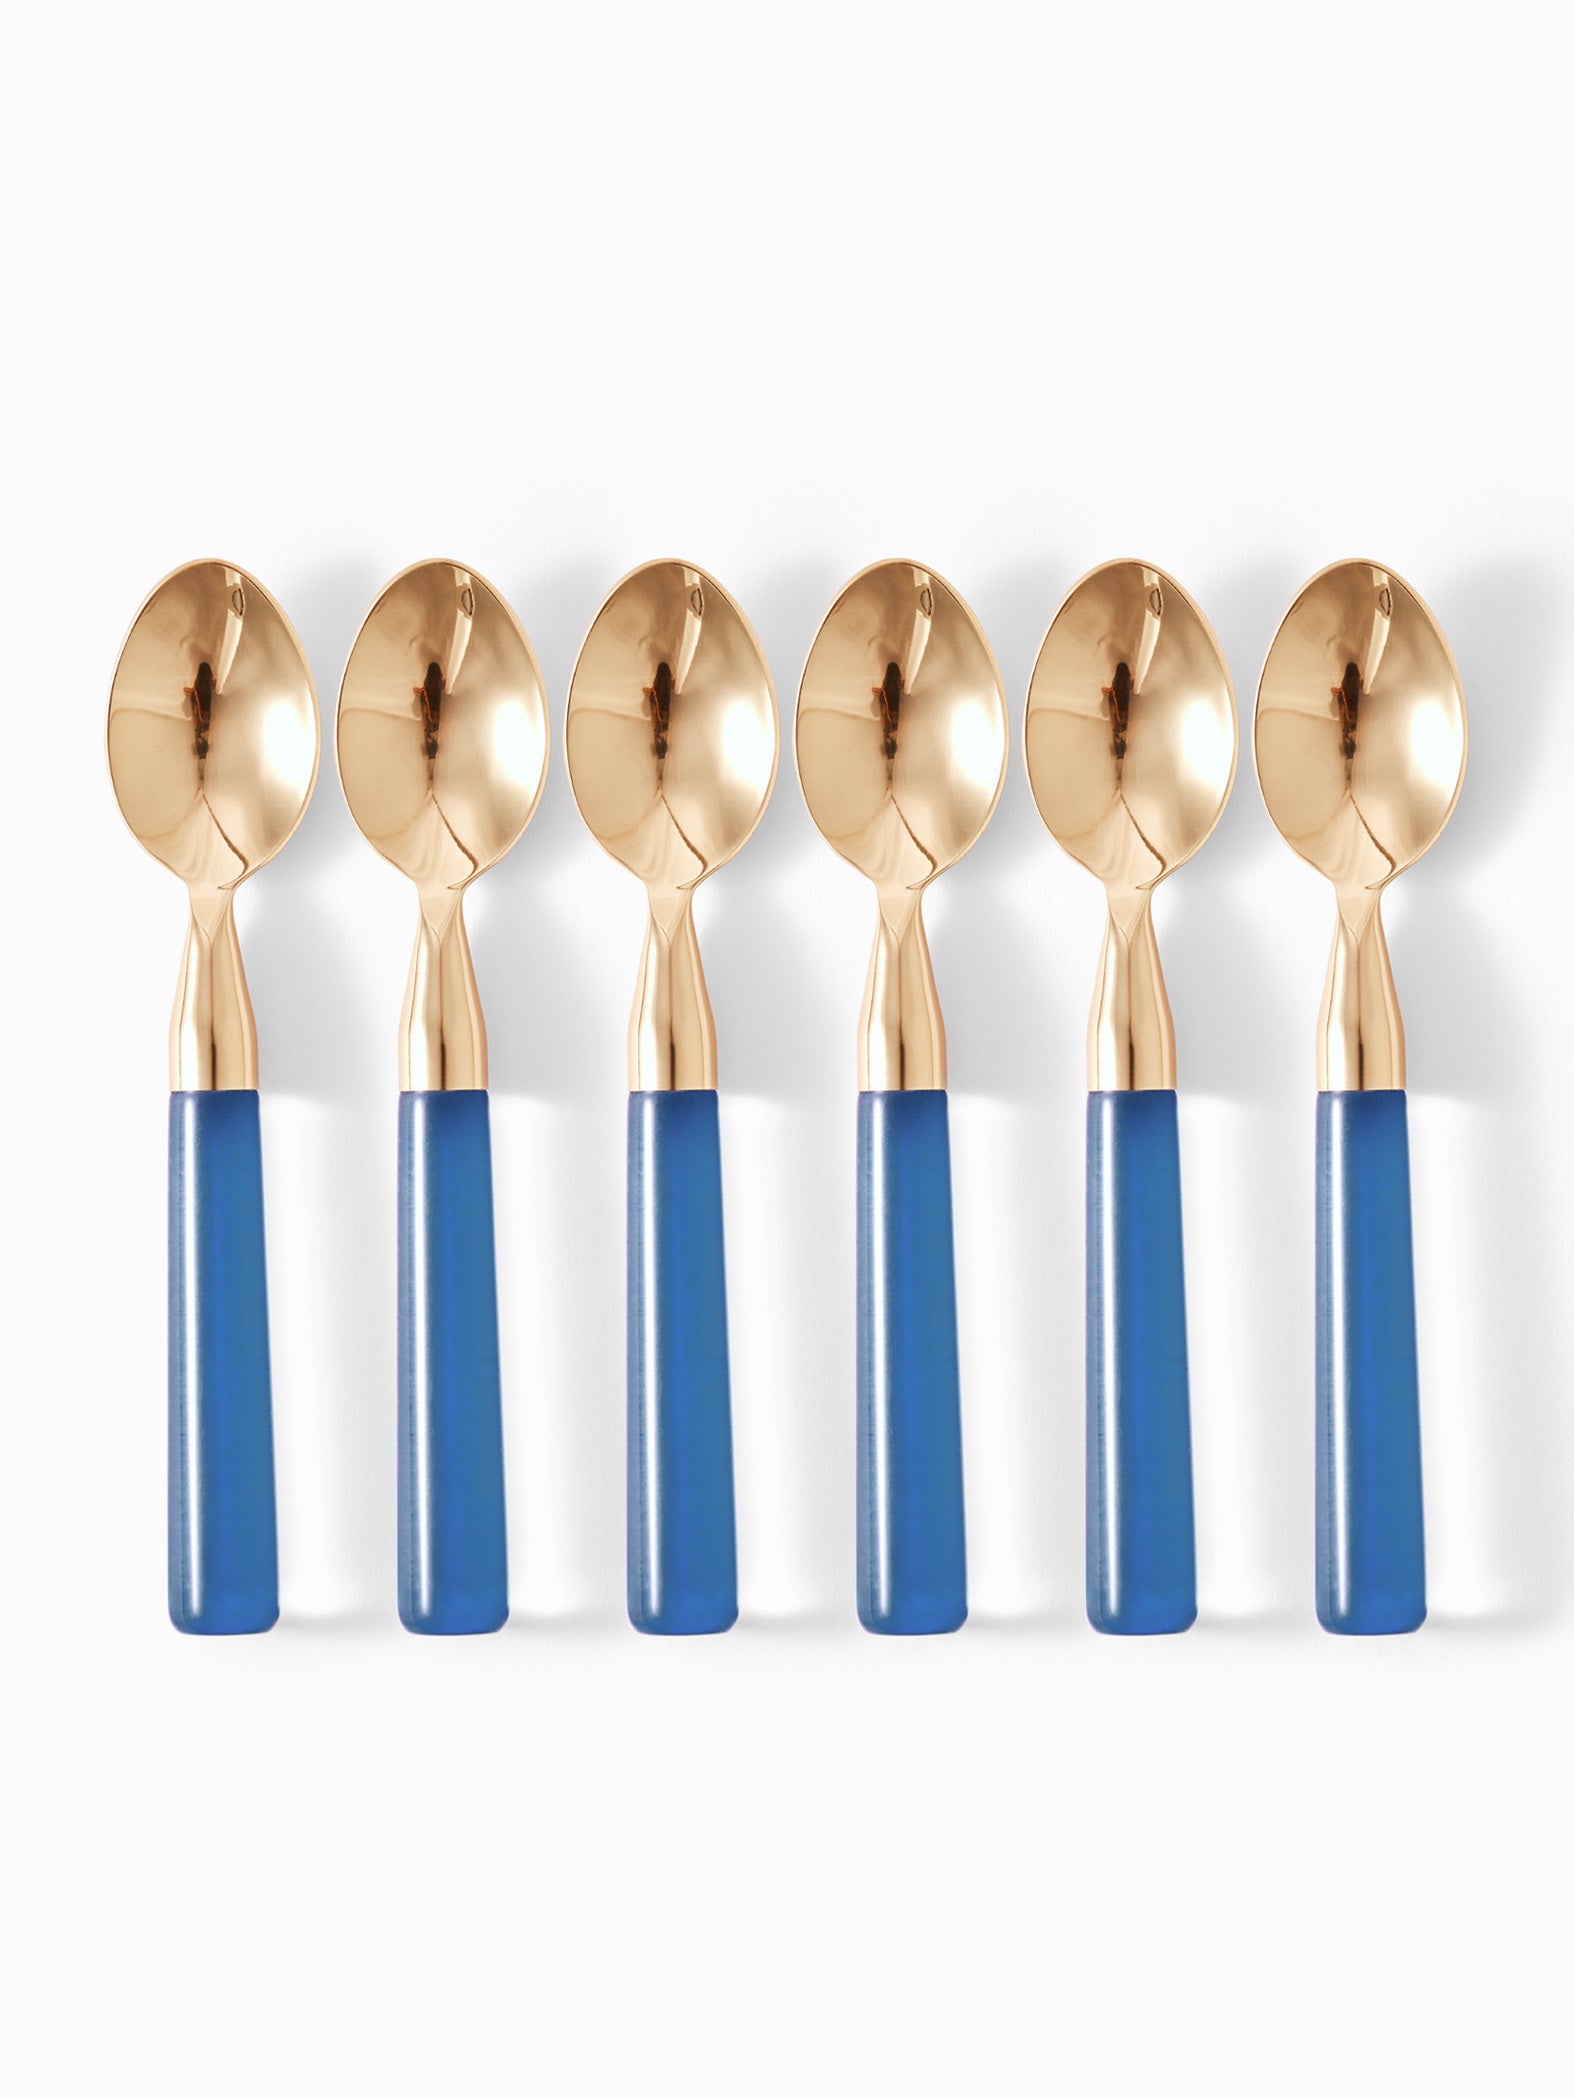 Gold & Acrylic Dessert Spoons